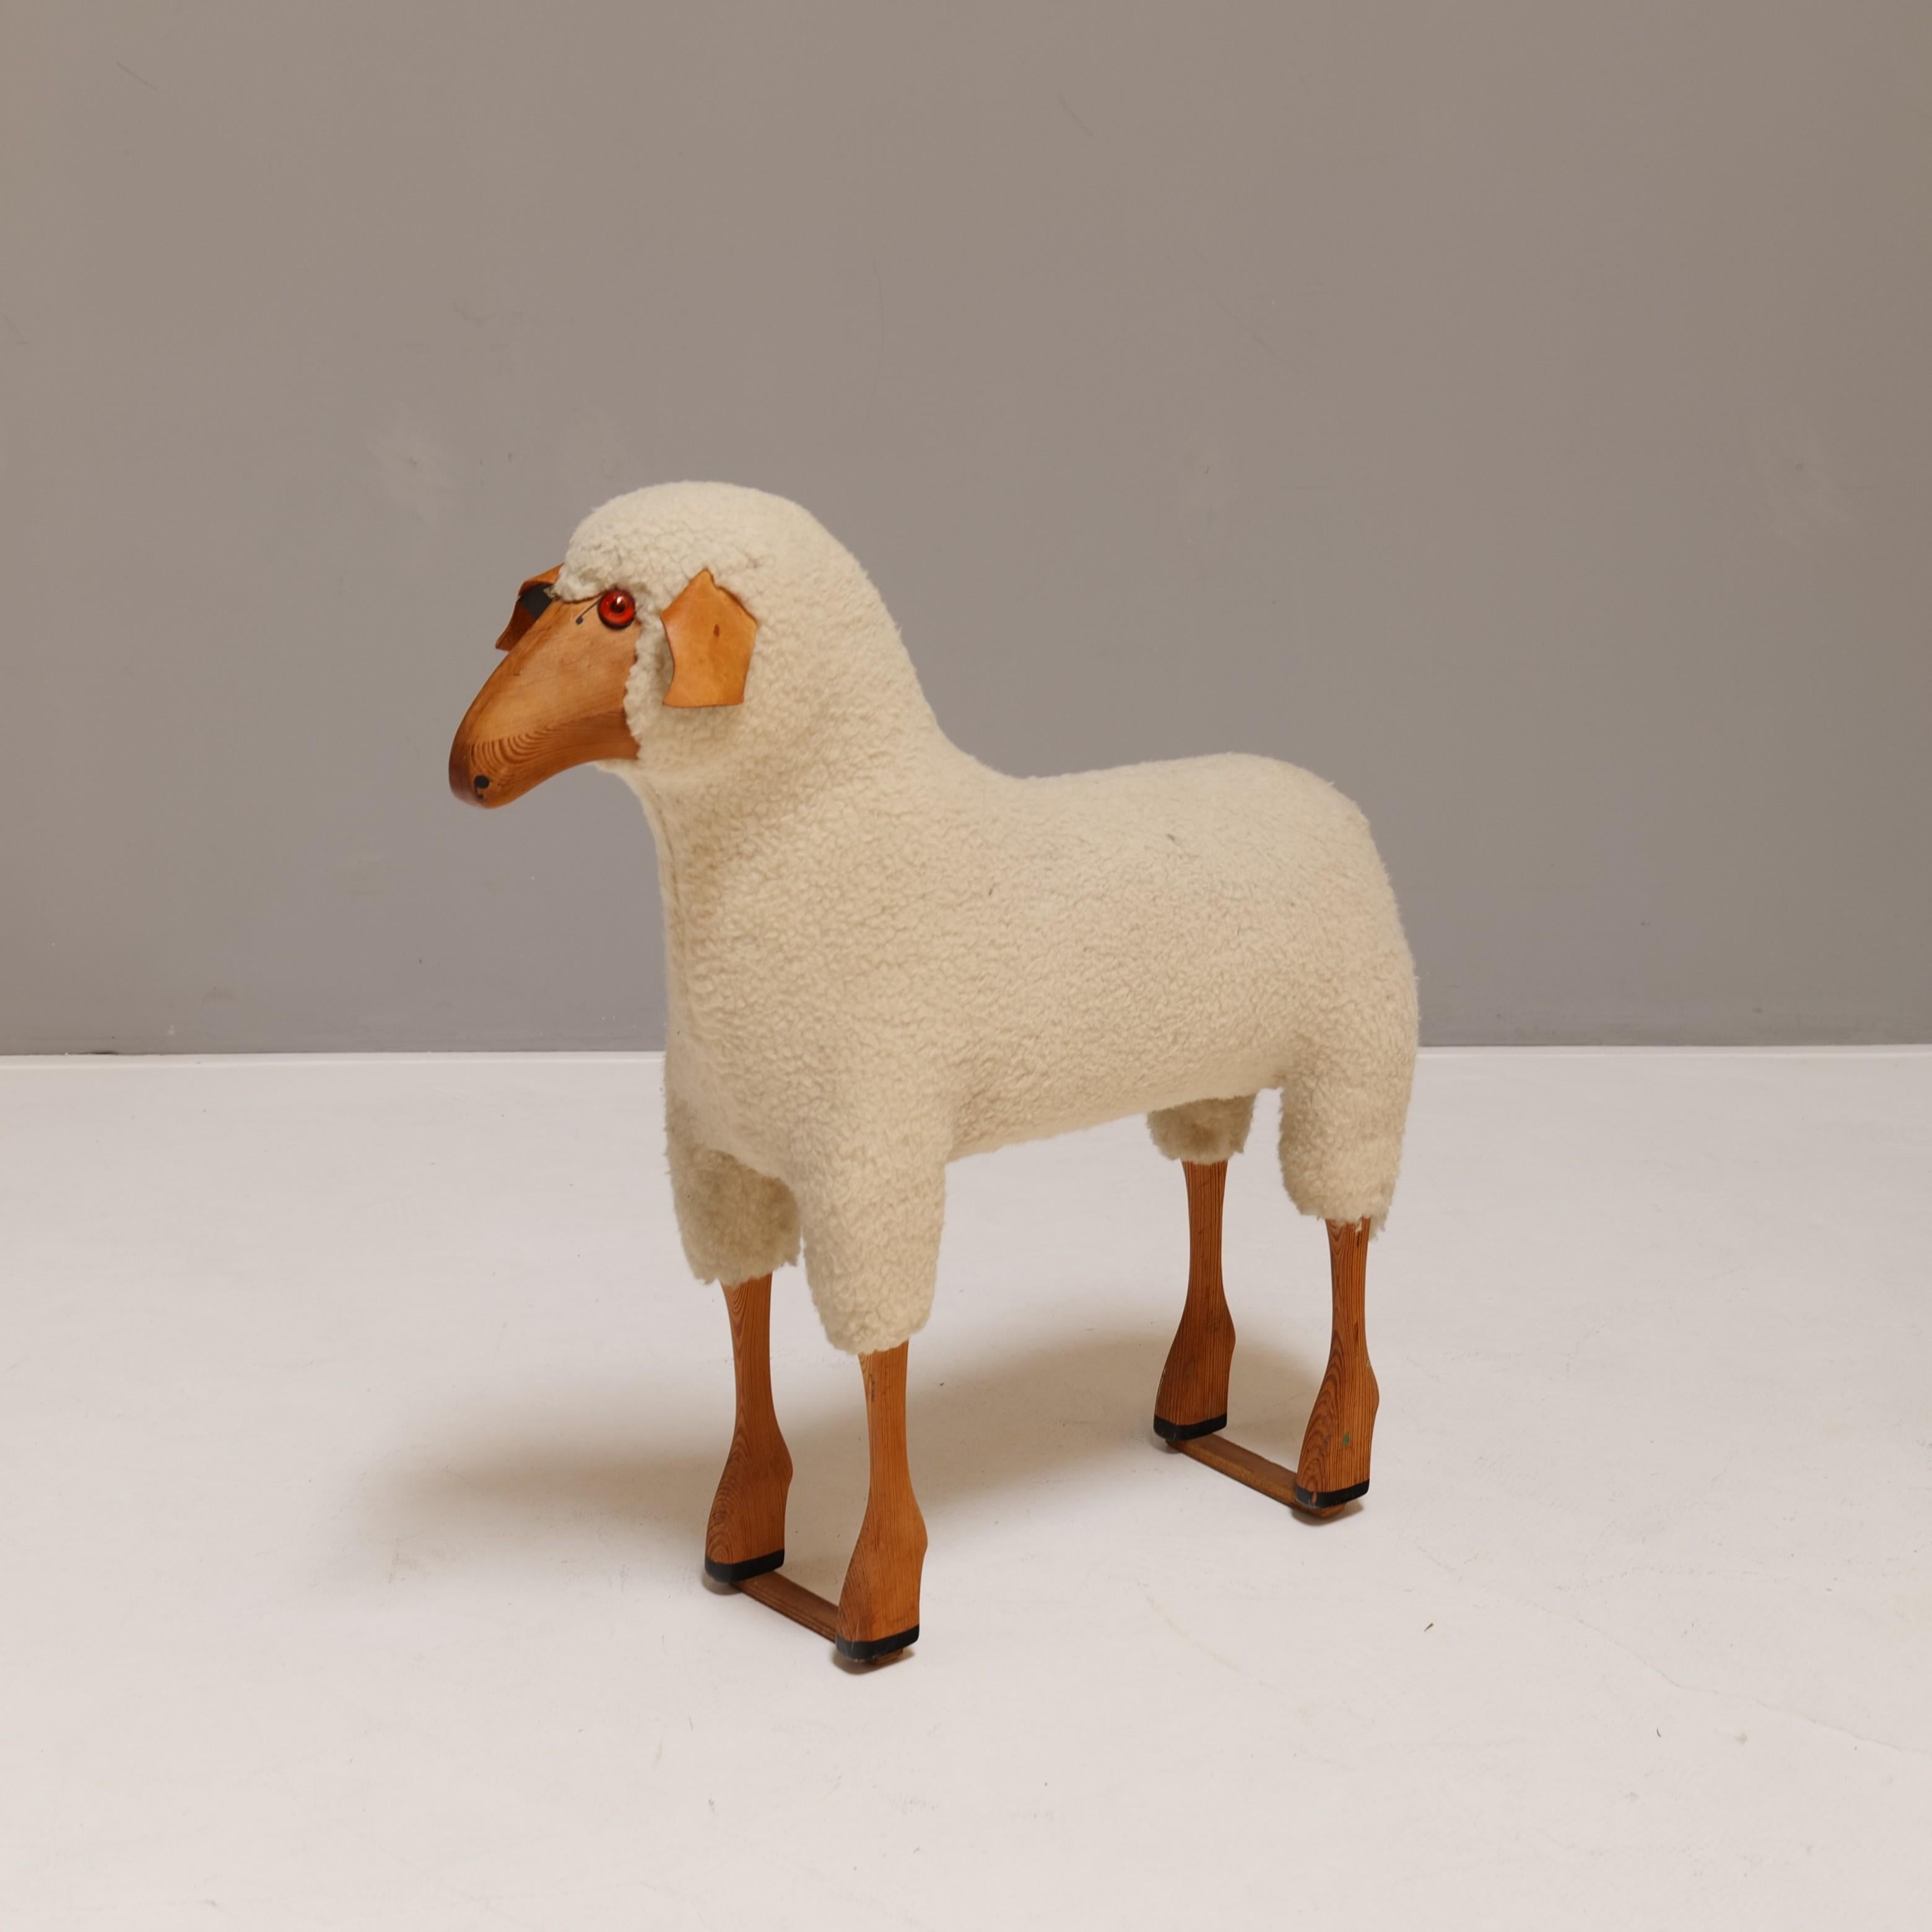 big vintage sheep by Hanns Peter Krafft schaf for Mayr wool - 1970s Germany 1